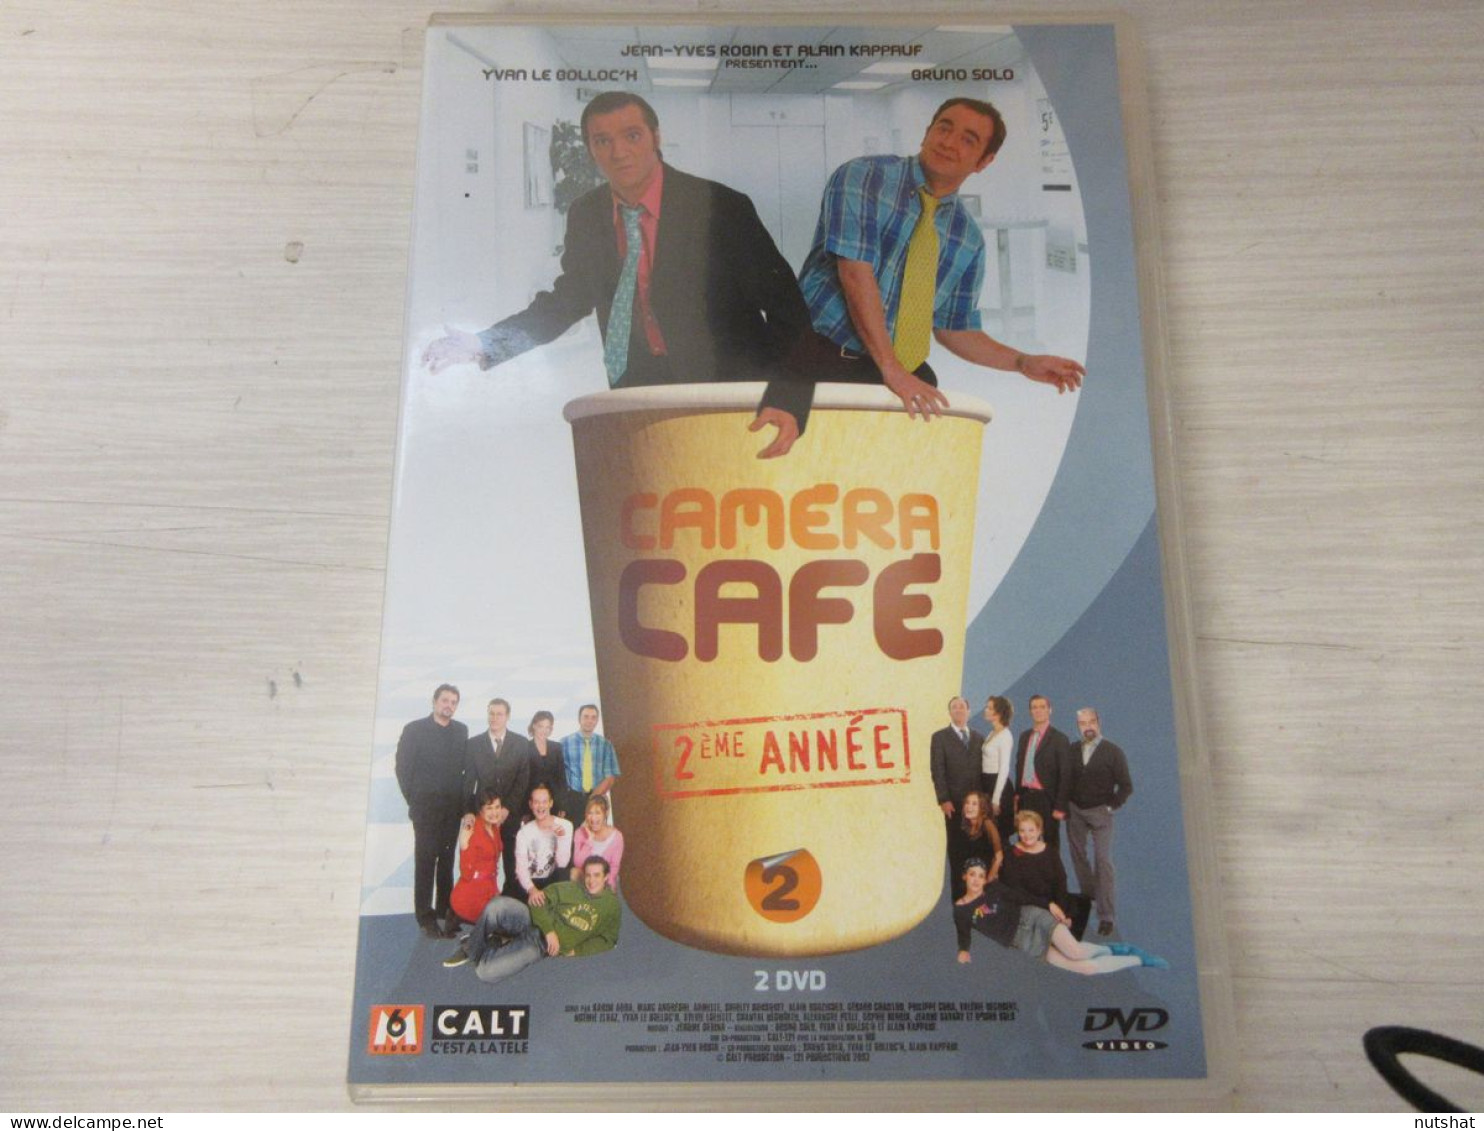 DVD SERIE TV CAMERA CAFE 2eme ANNEE Bruno SOLO Yvan Le BOLLOC'H 2xDVD 2002  - Séries Et Programmes TV